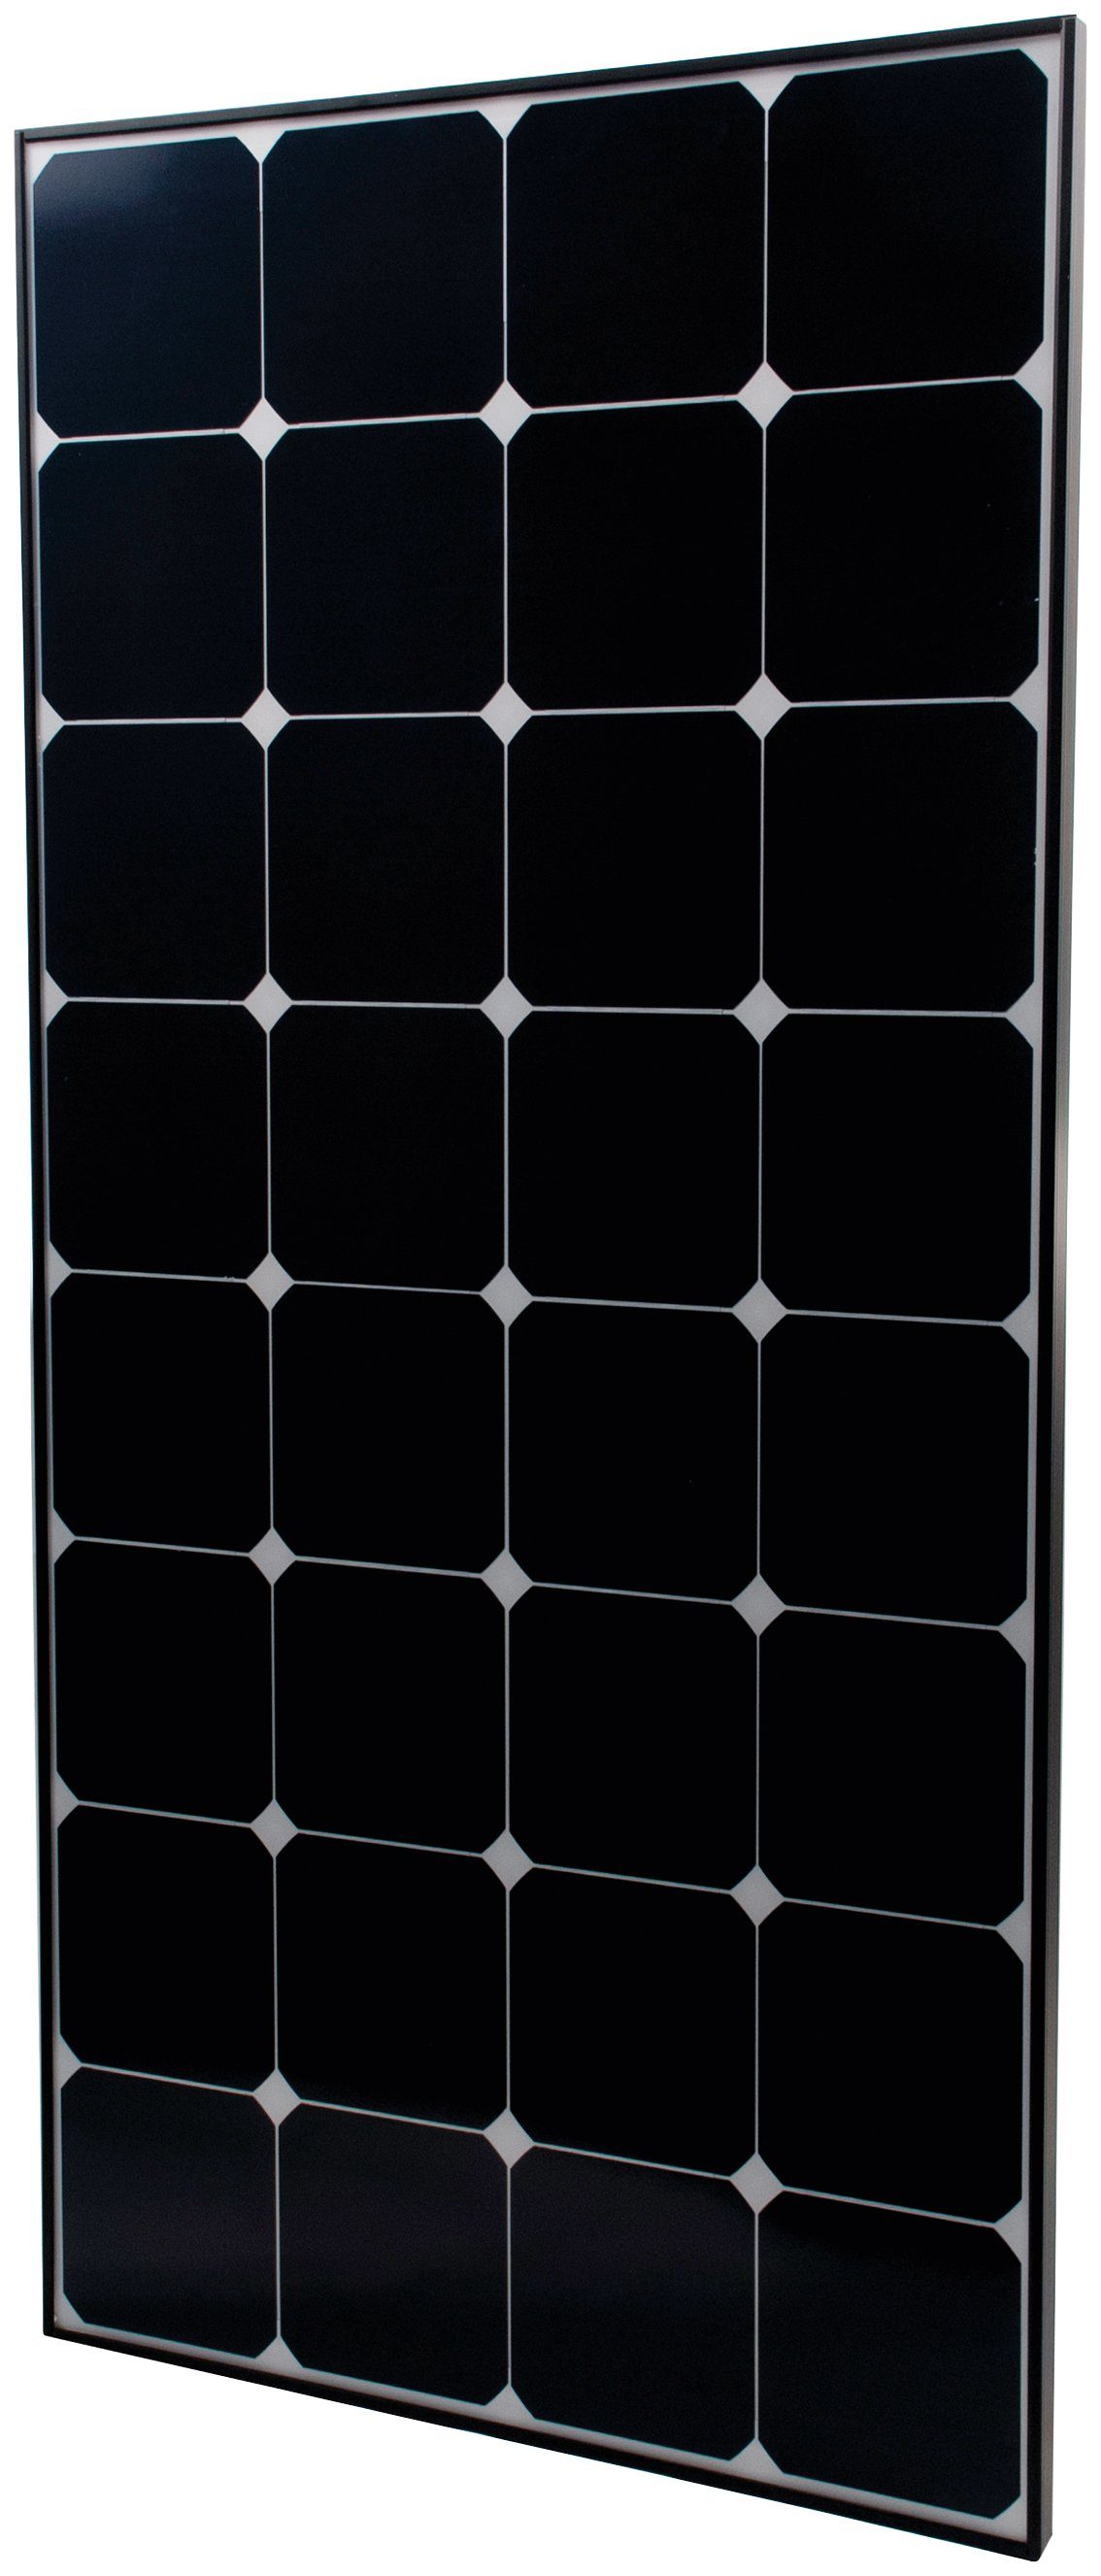 Phaesun Solarmodul Sun Peak SPR 80, 80 W, 12 VDC, IP65 Schutz